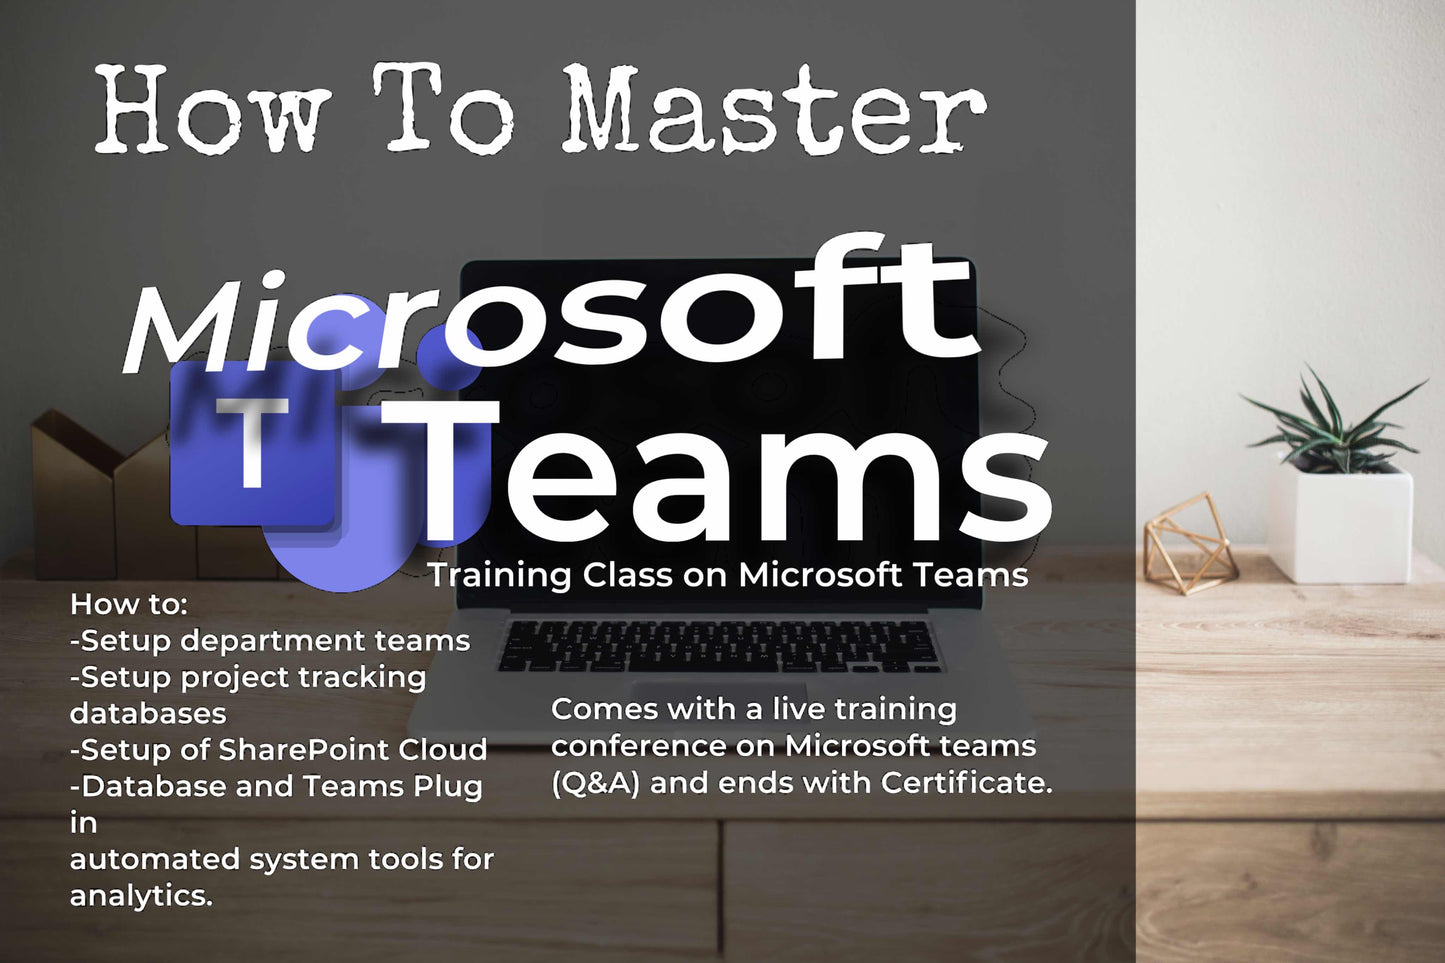 Microsoft Teams training. How to master Microsoft Teams. 